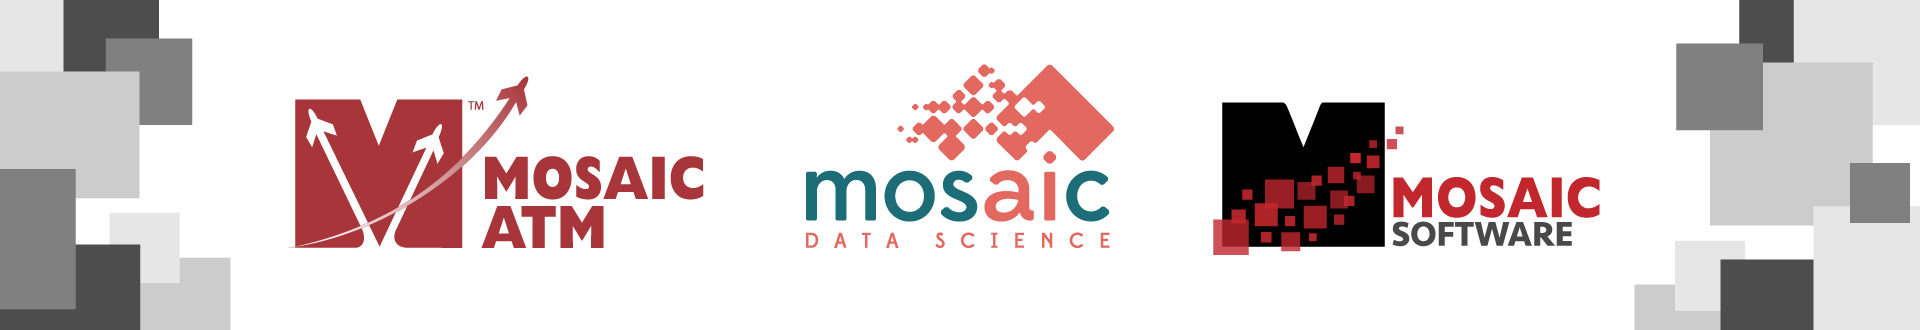 Mosaic ATM logo